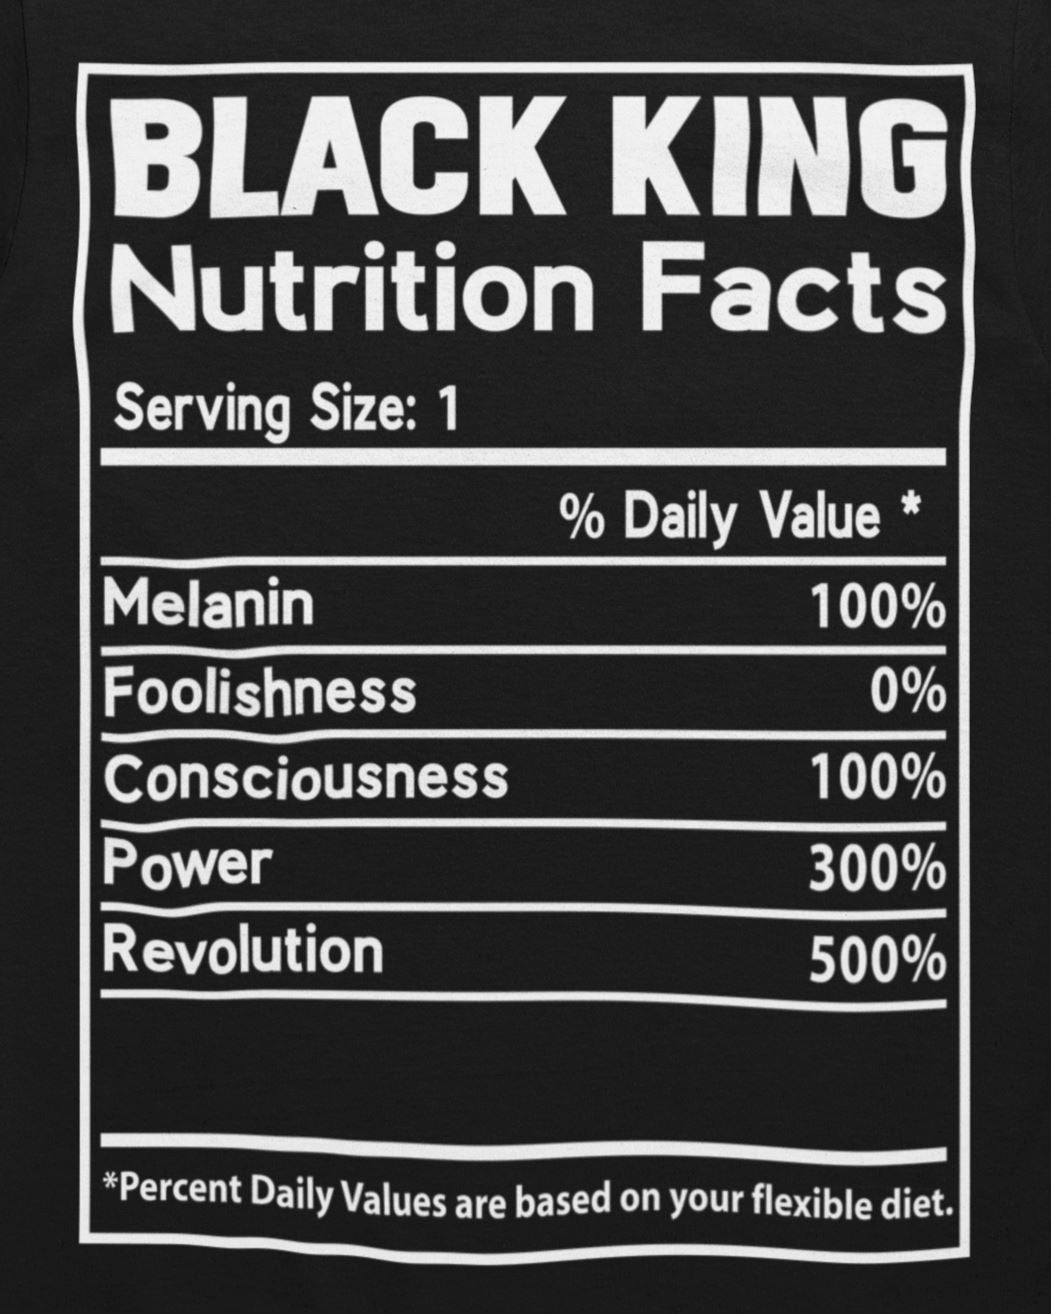 Black King Nutrition Facts T-shirt Apparel Gearment 